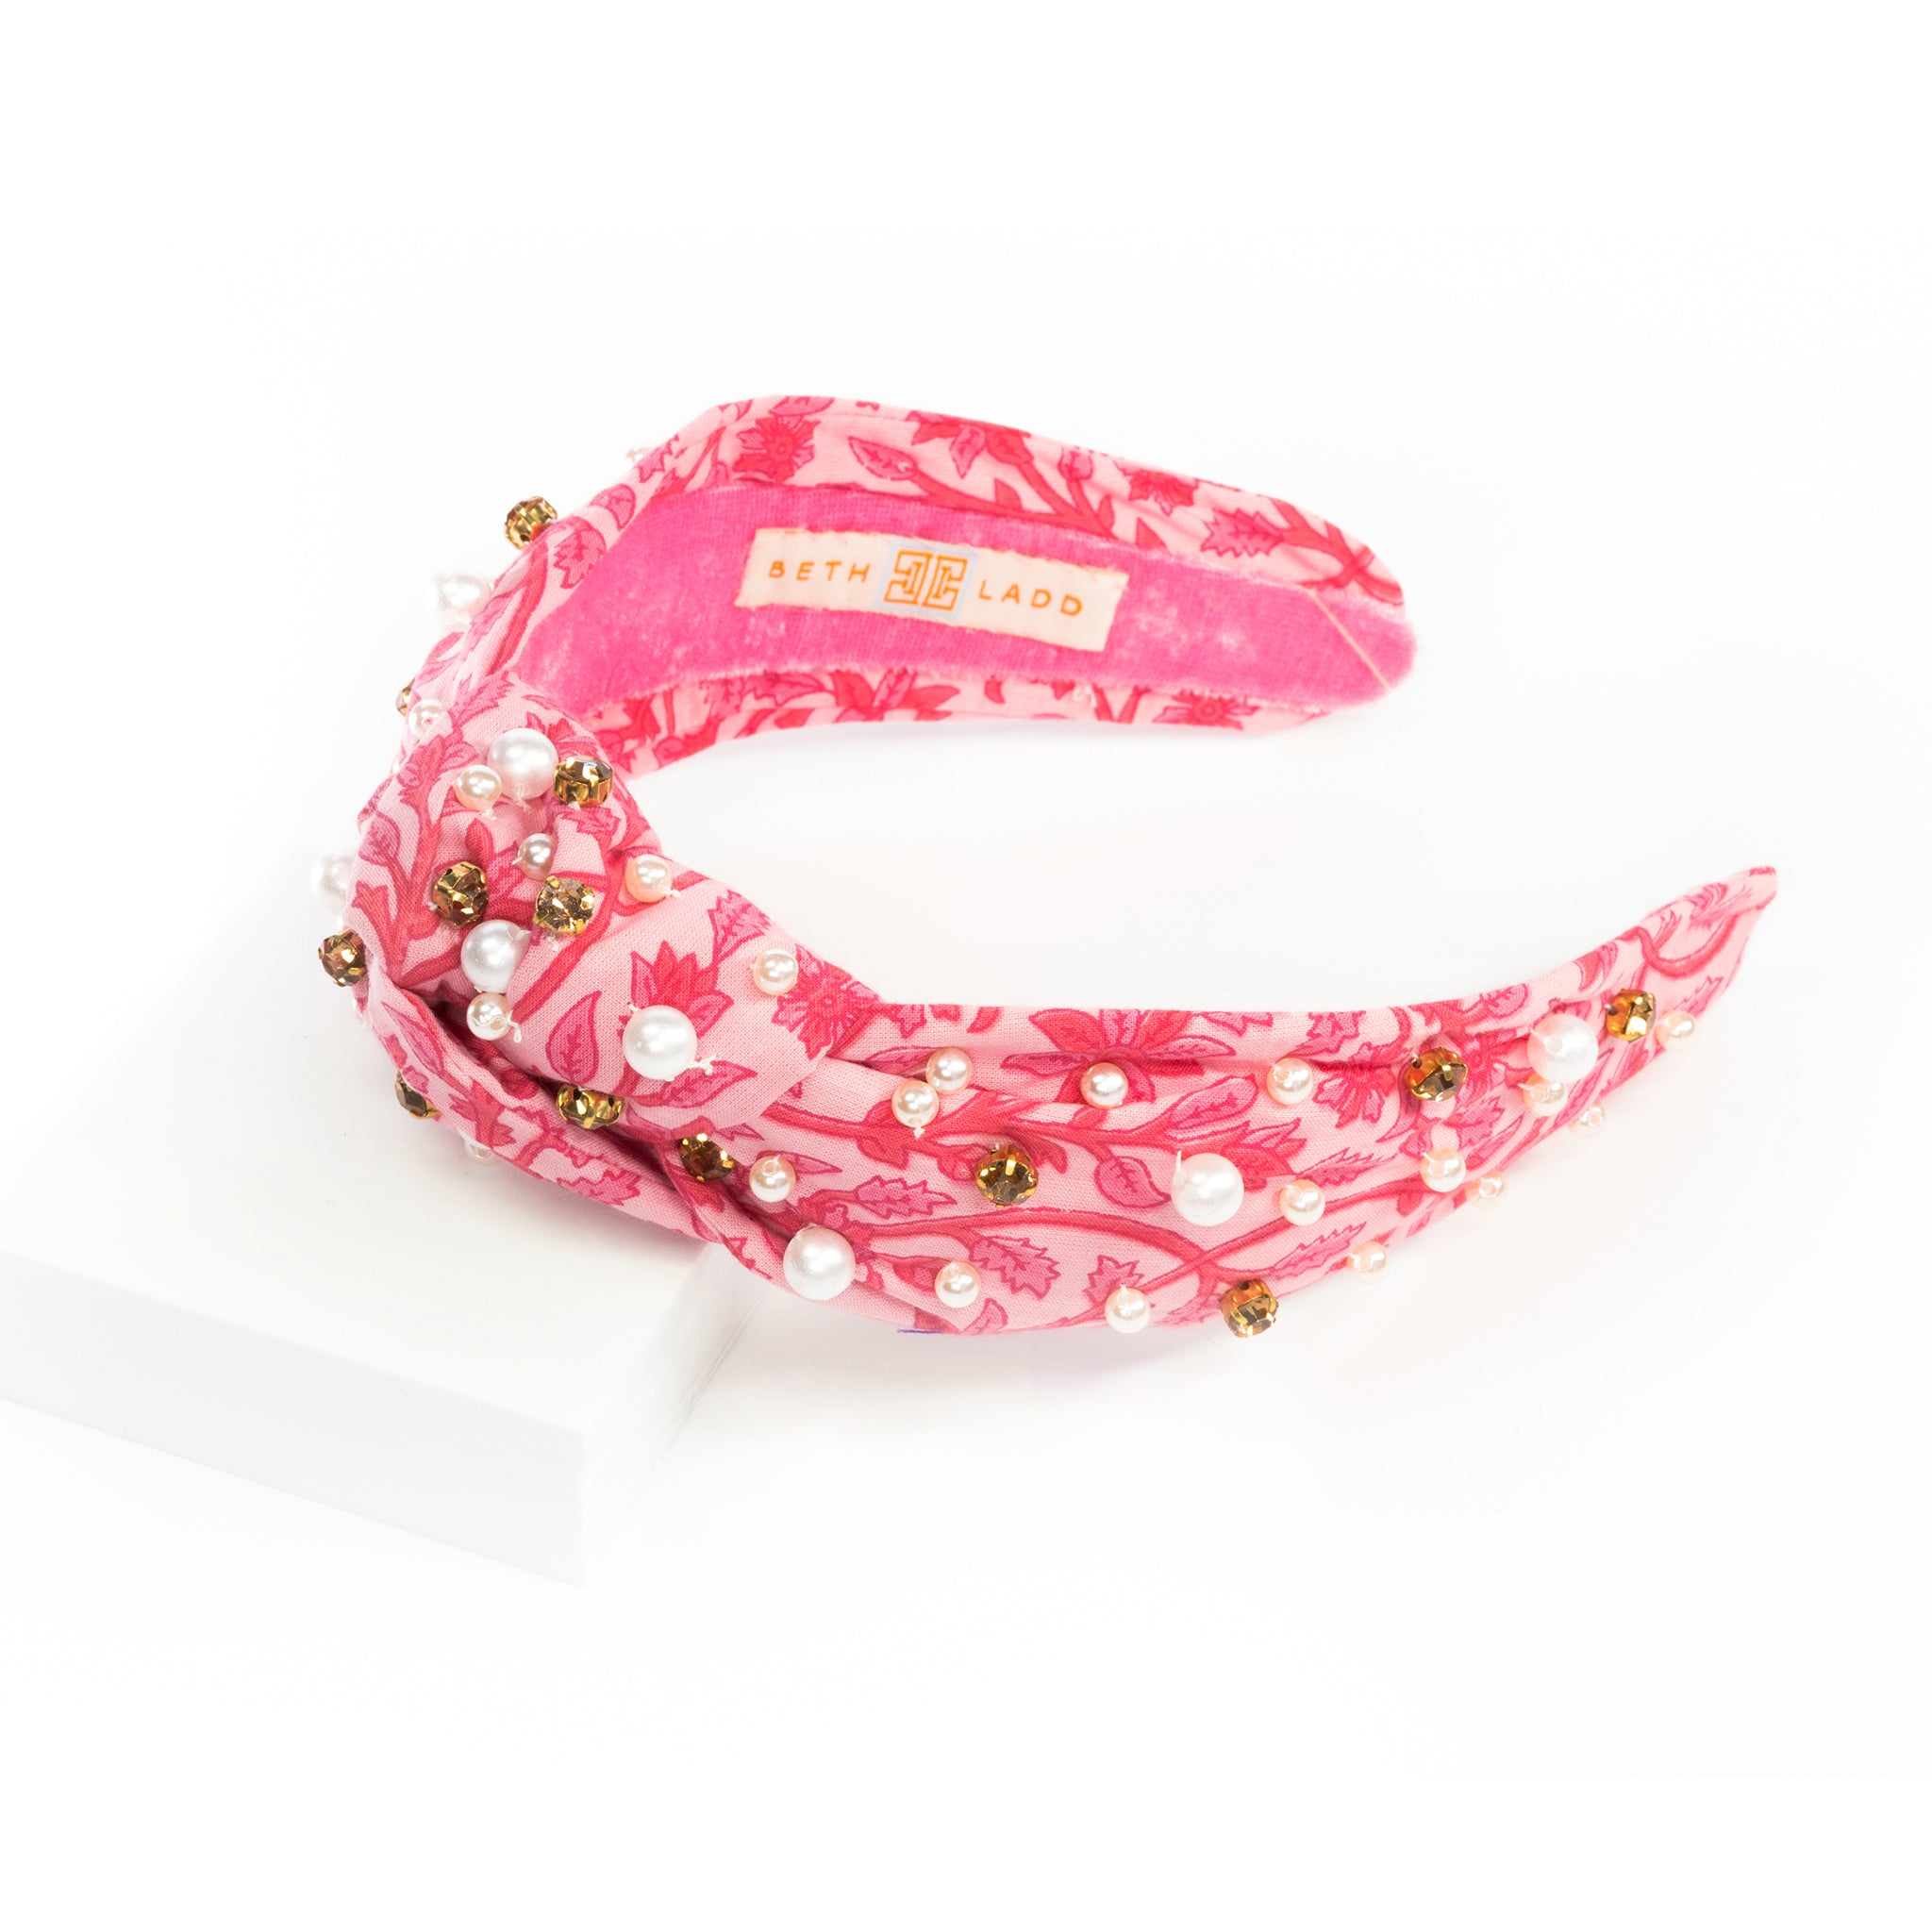 Block Print Headband with Gems in Highland Park Pink